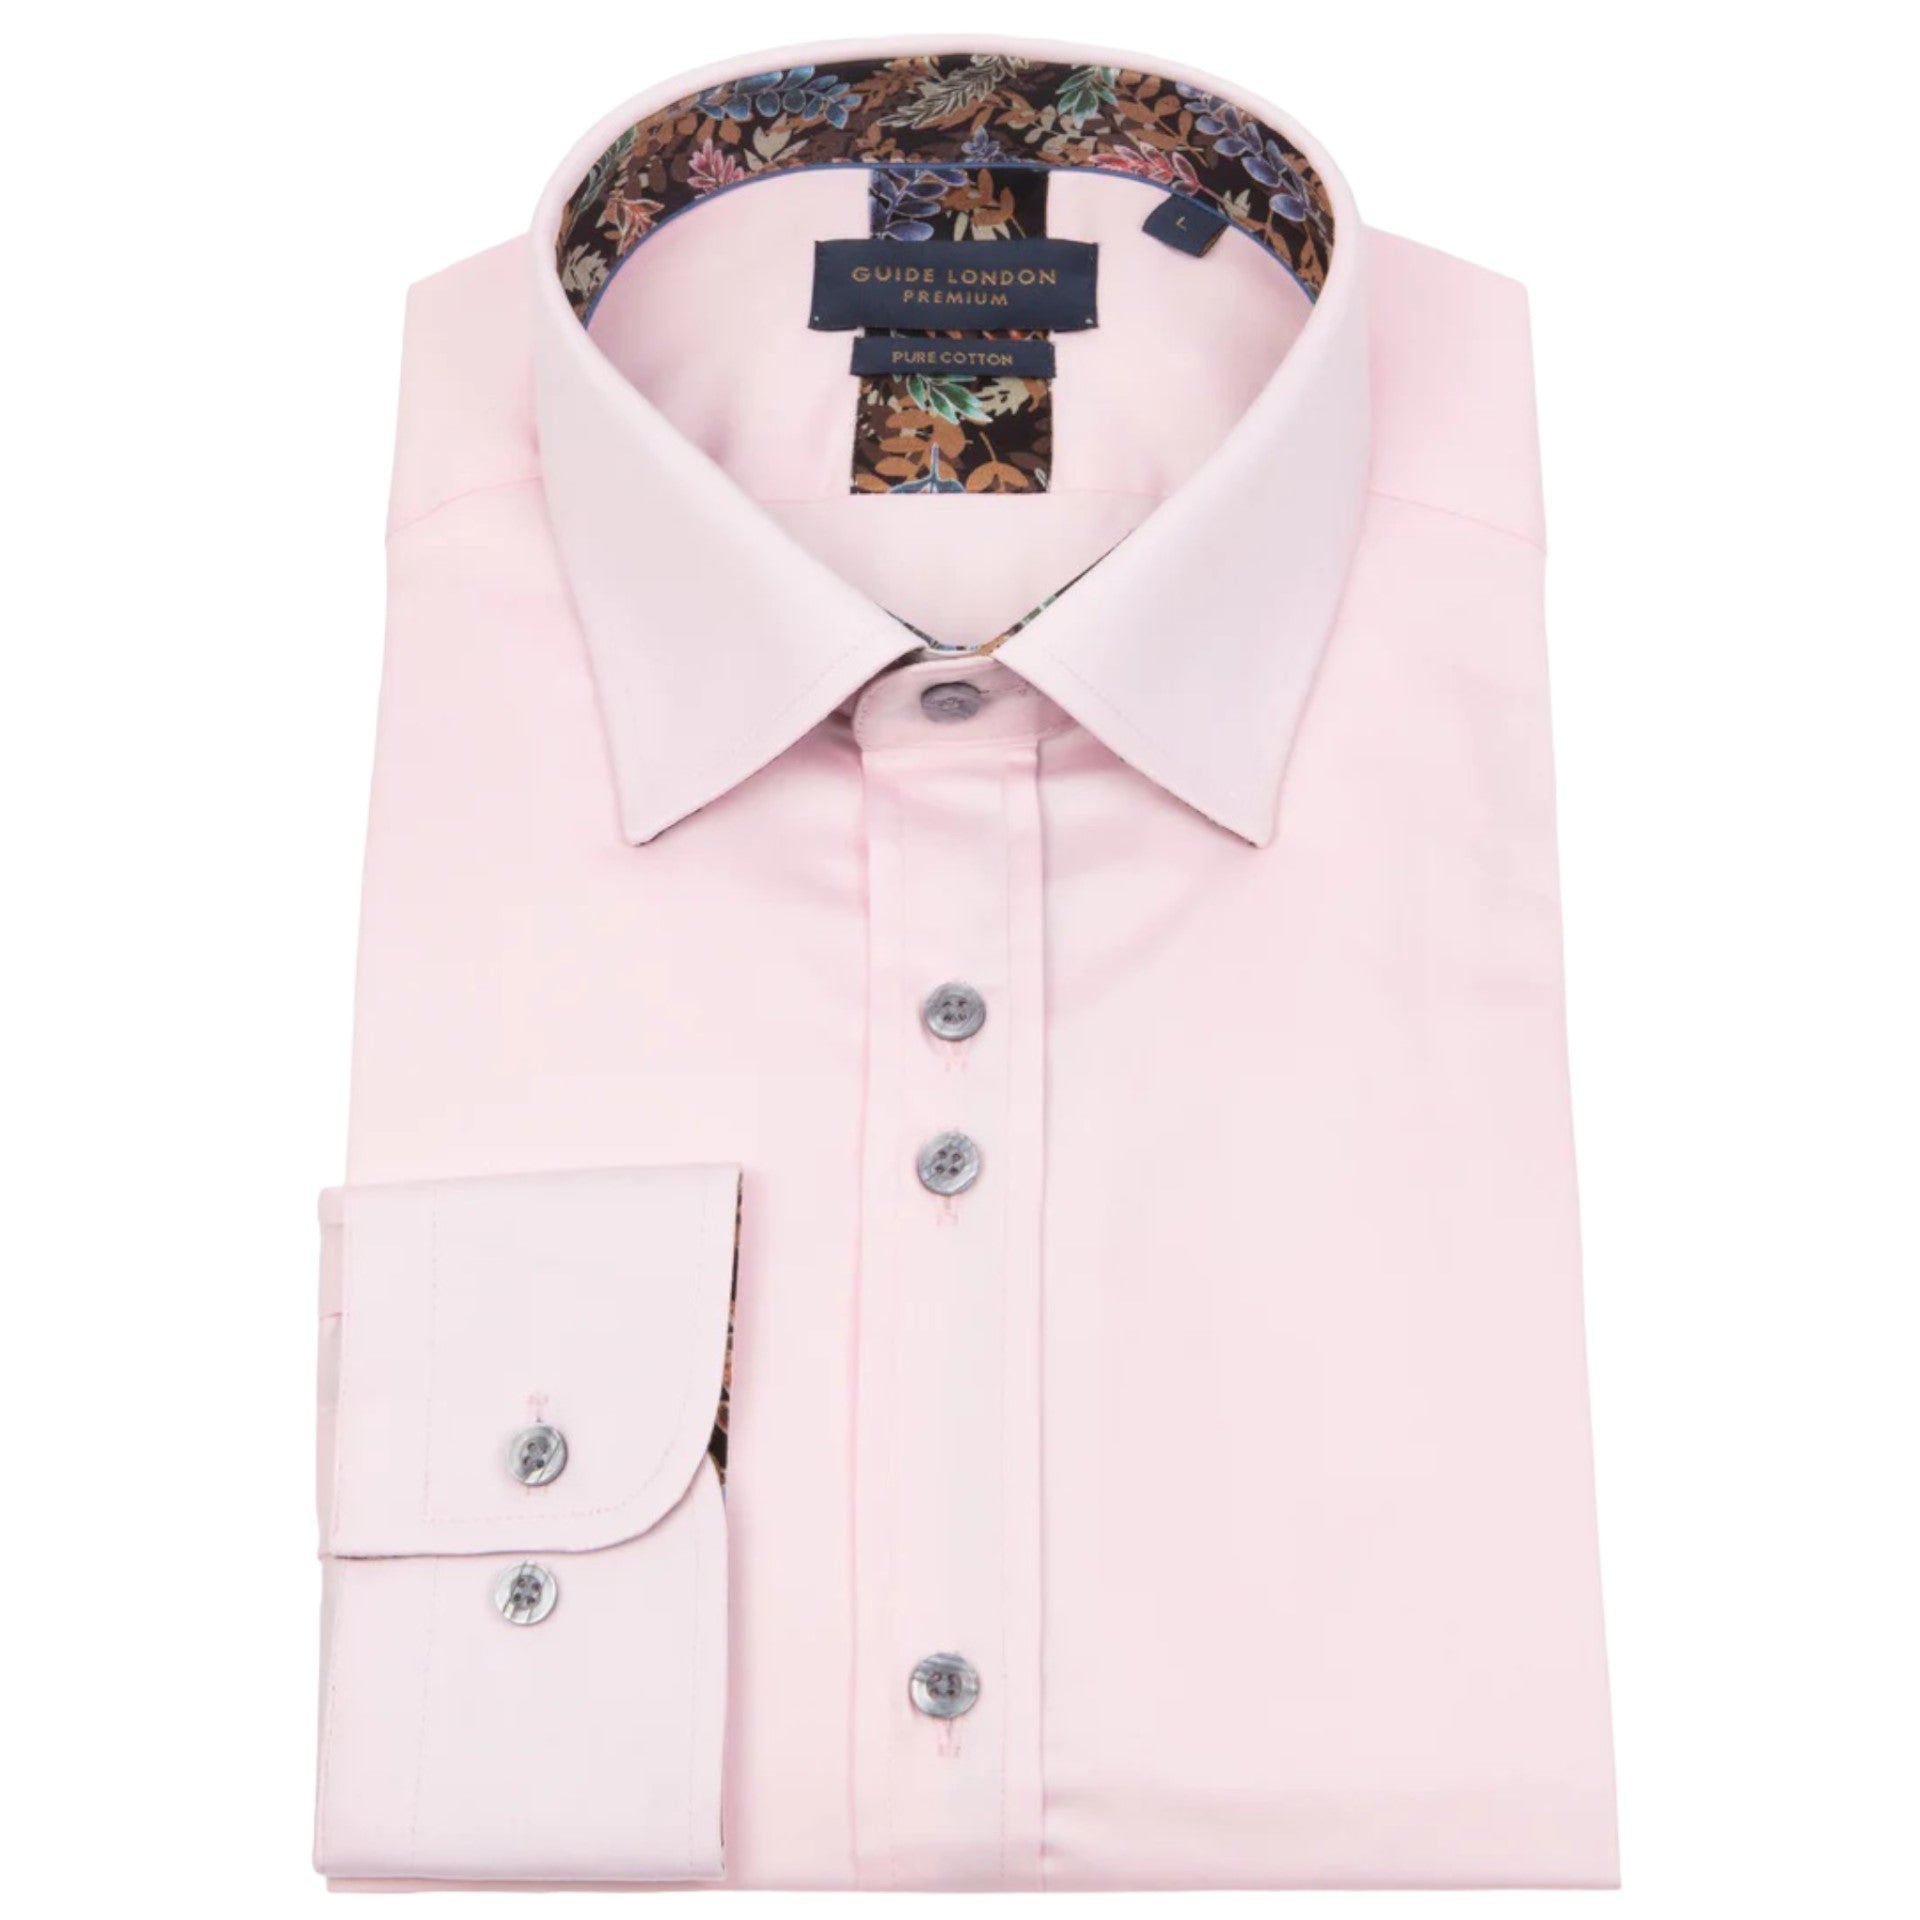 Guide London Long Sleeve Pink Cotton Shirt (LS76784)